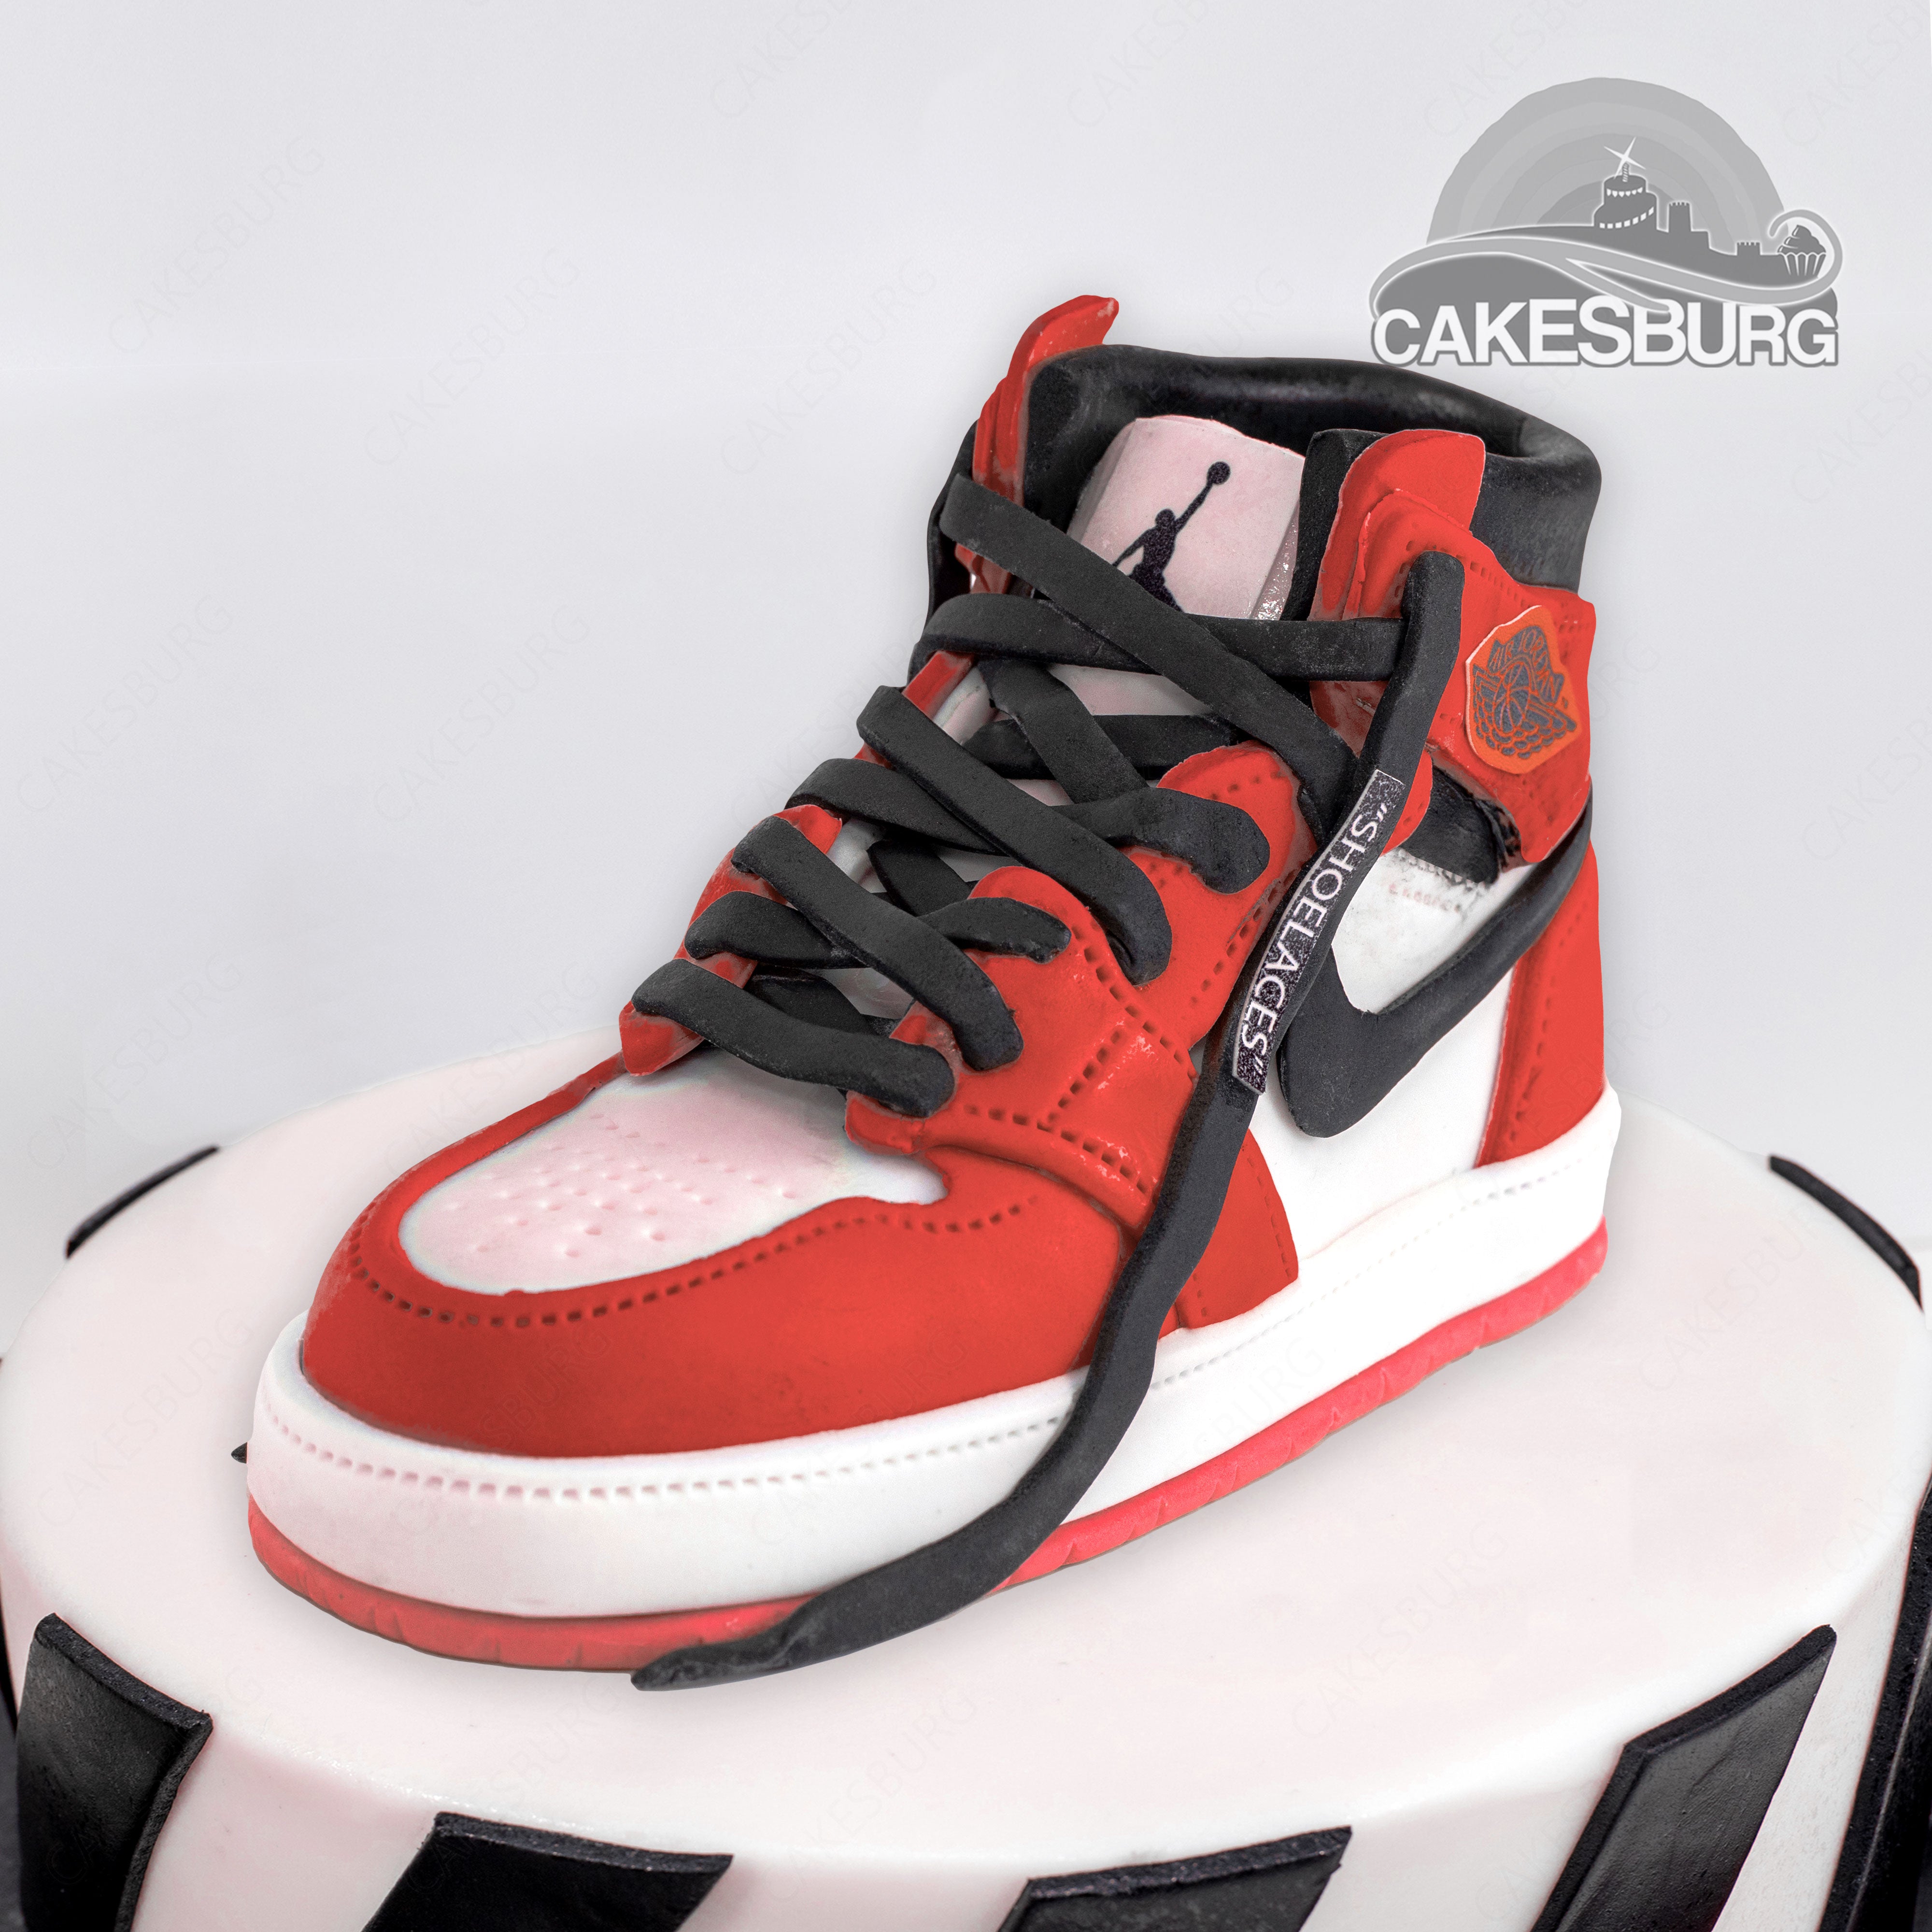 Zebra Shoe/Shoe box Cake - Jessica Harris Cake Design